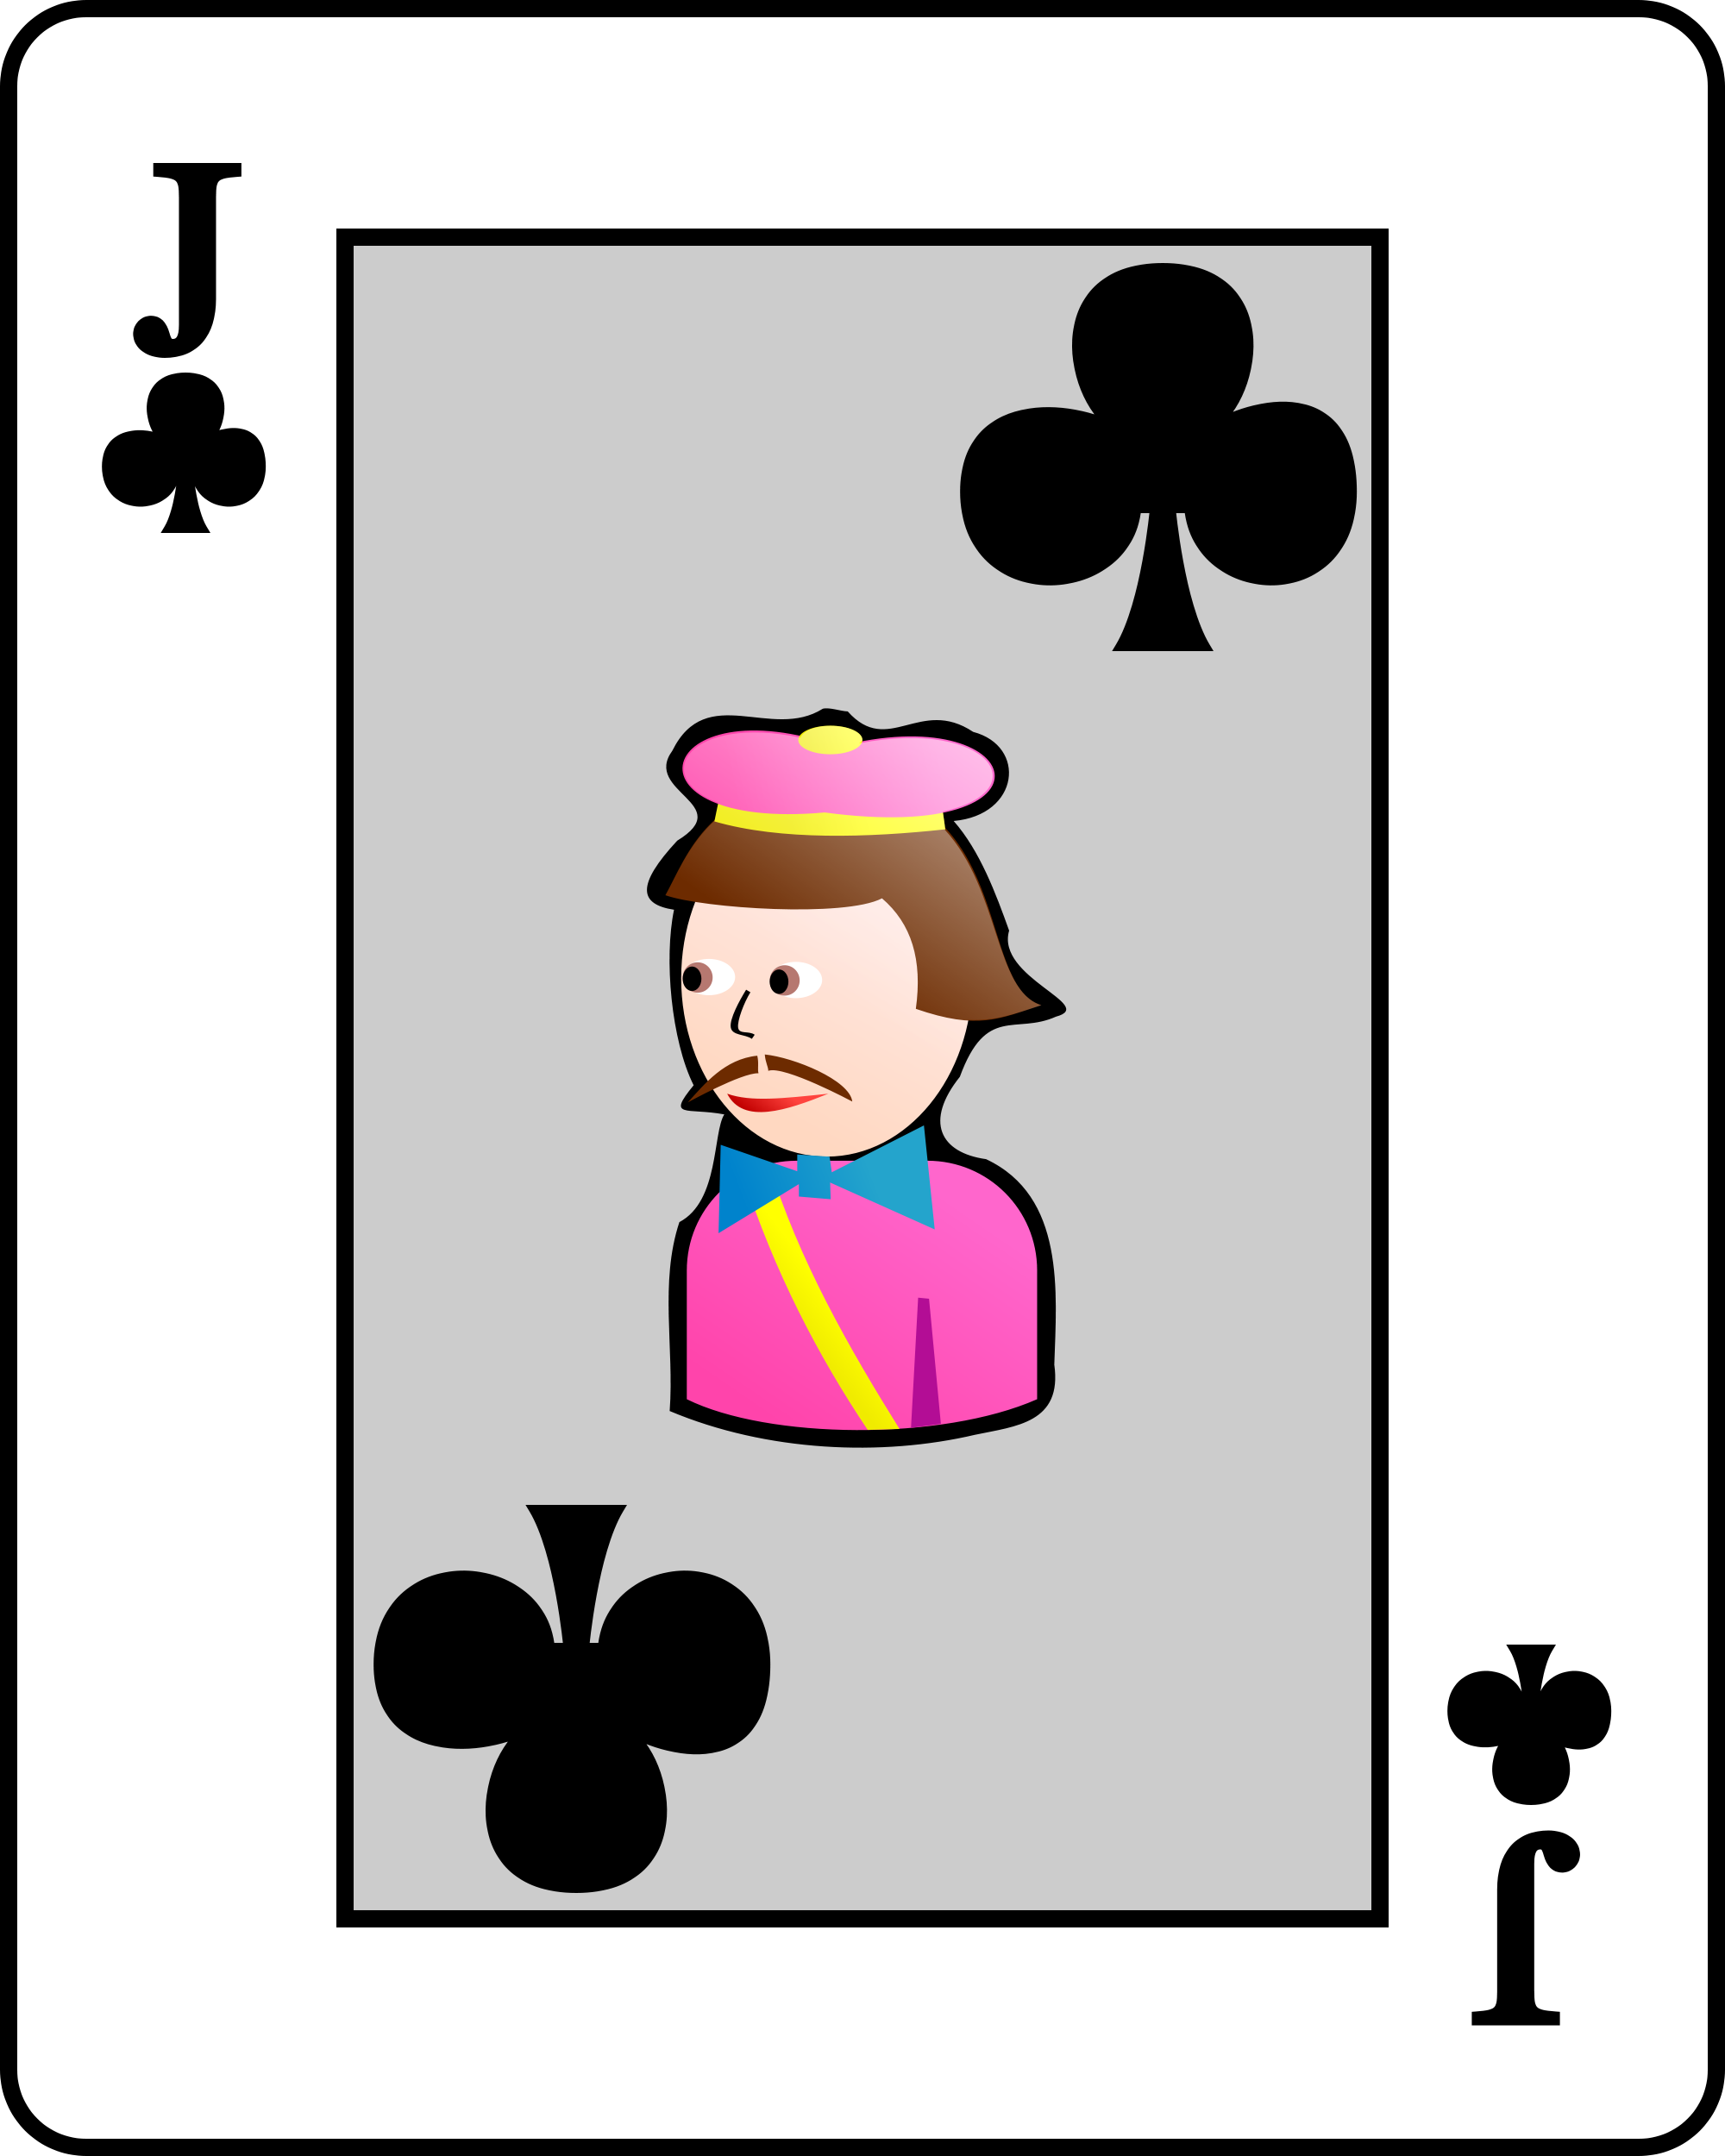 File:Playing card club J.svg